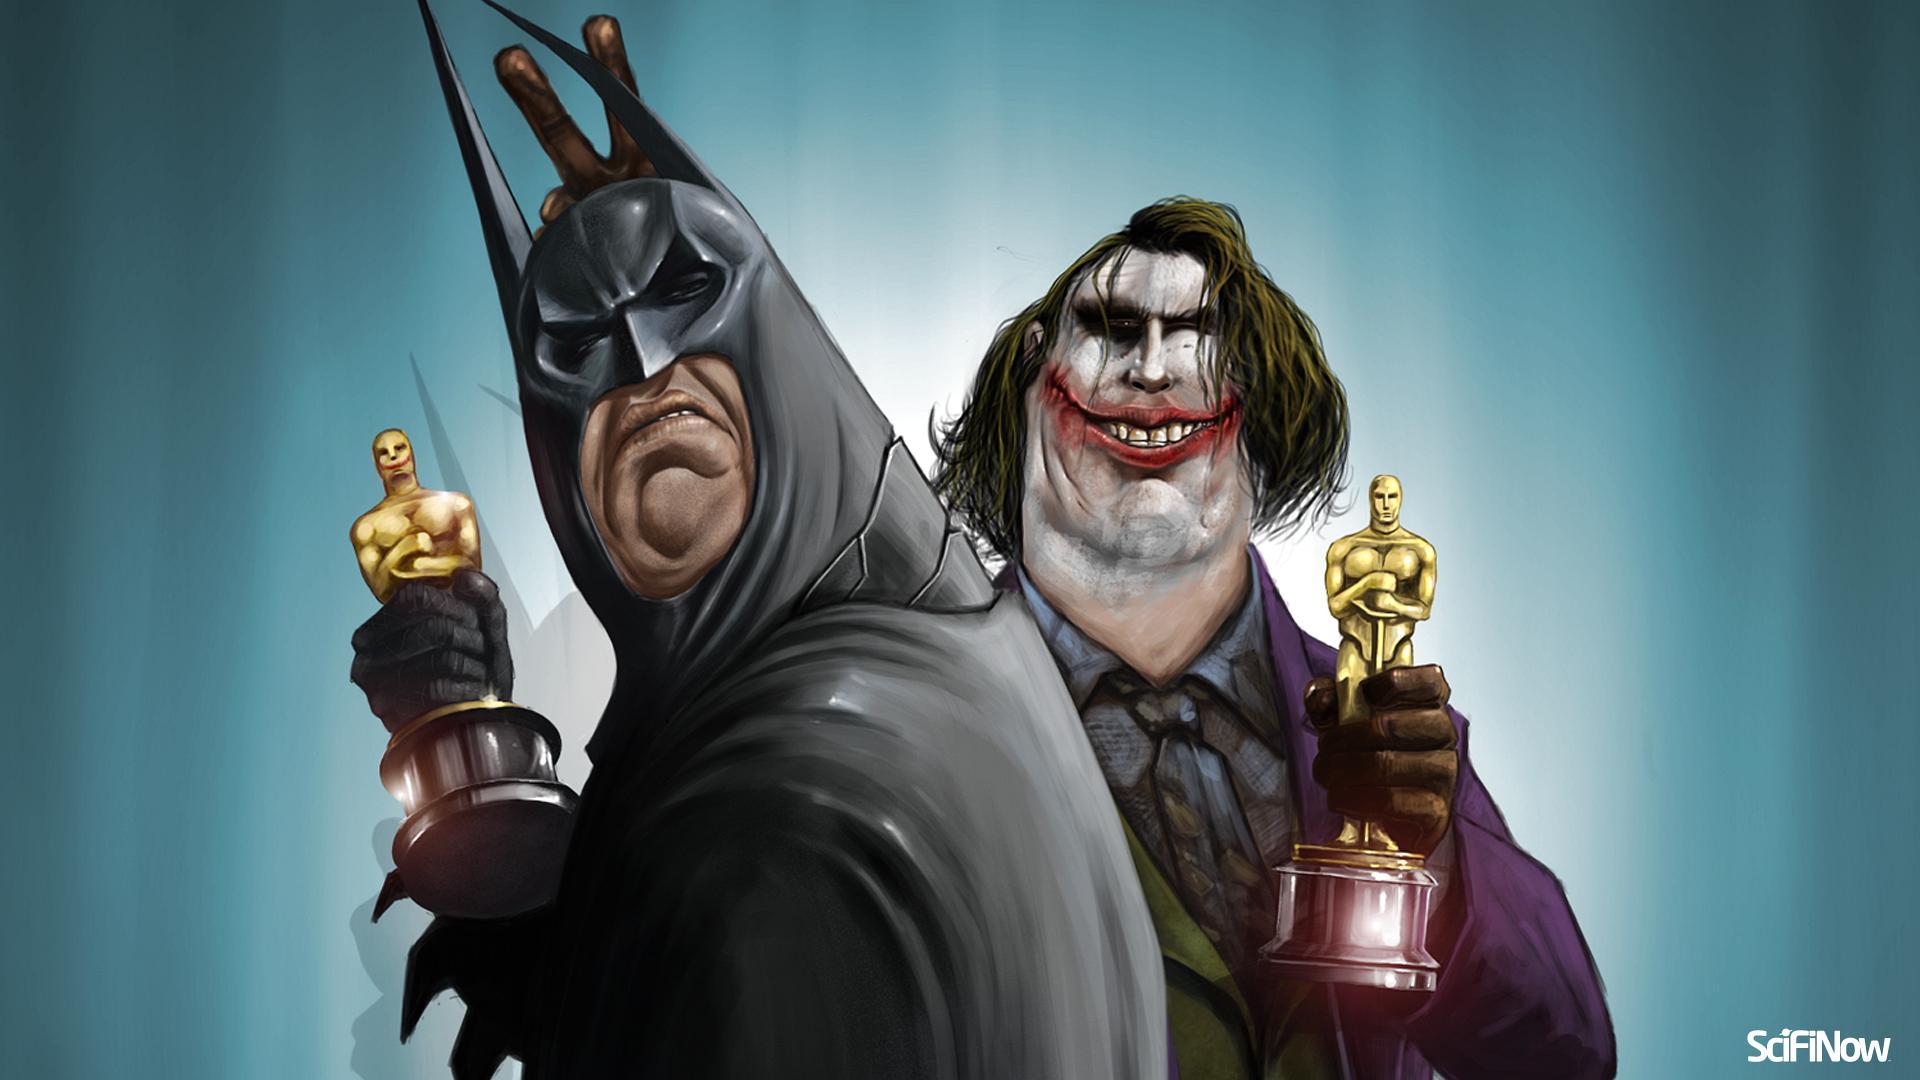 Wallpaper Funny Joker And Batman Fat And Old x 1080